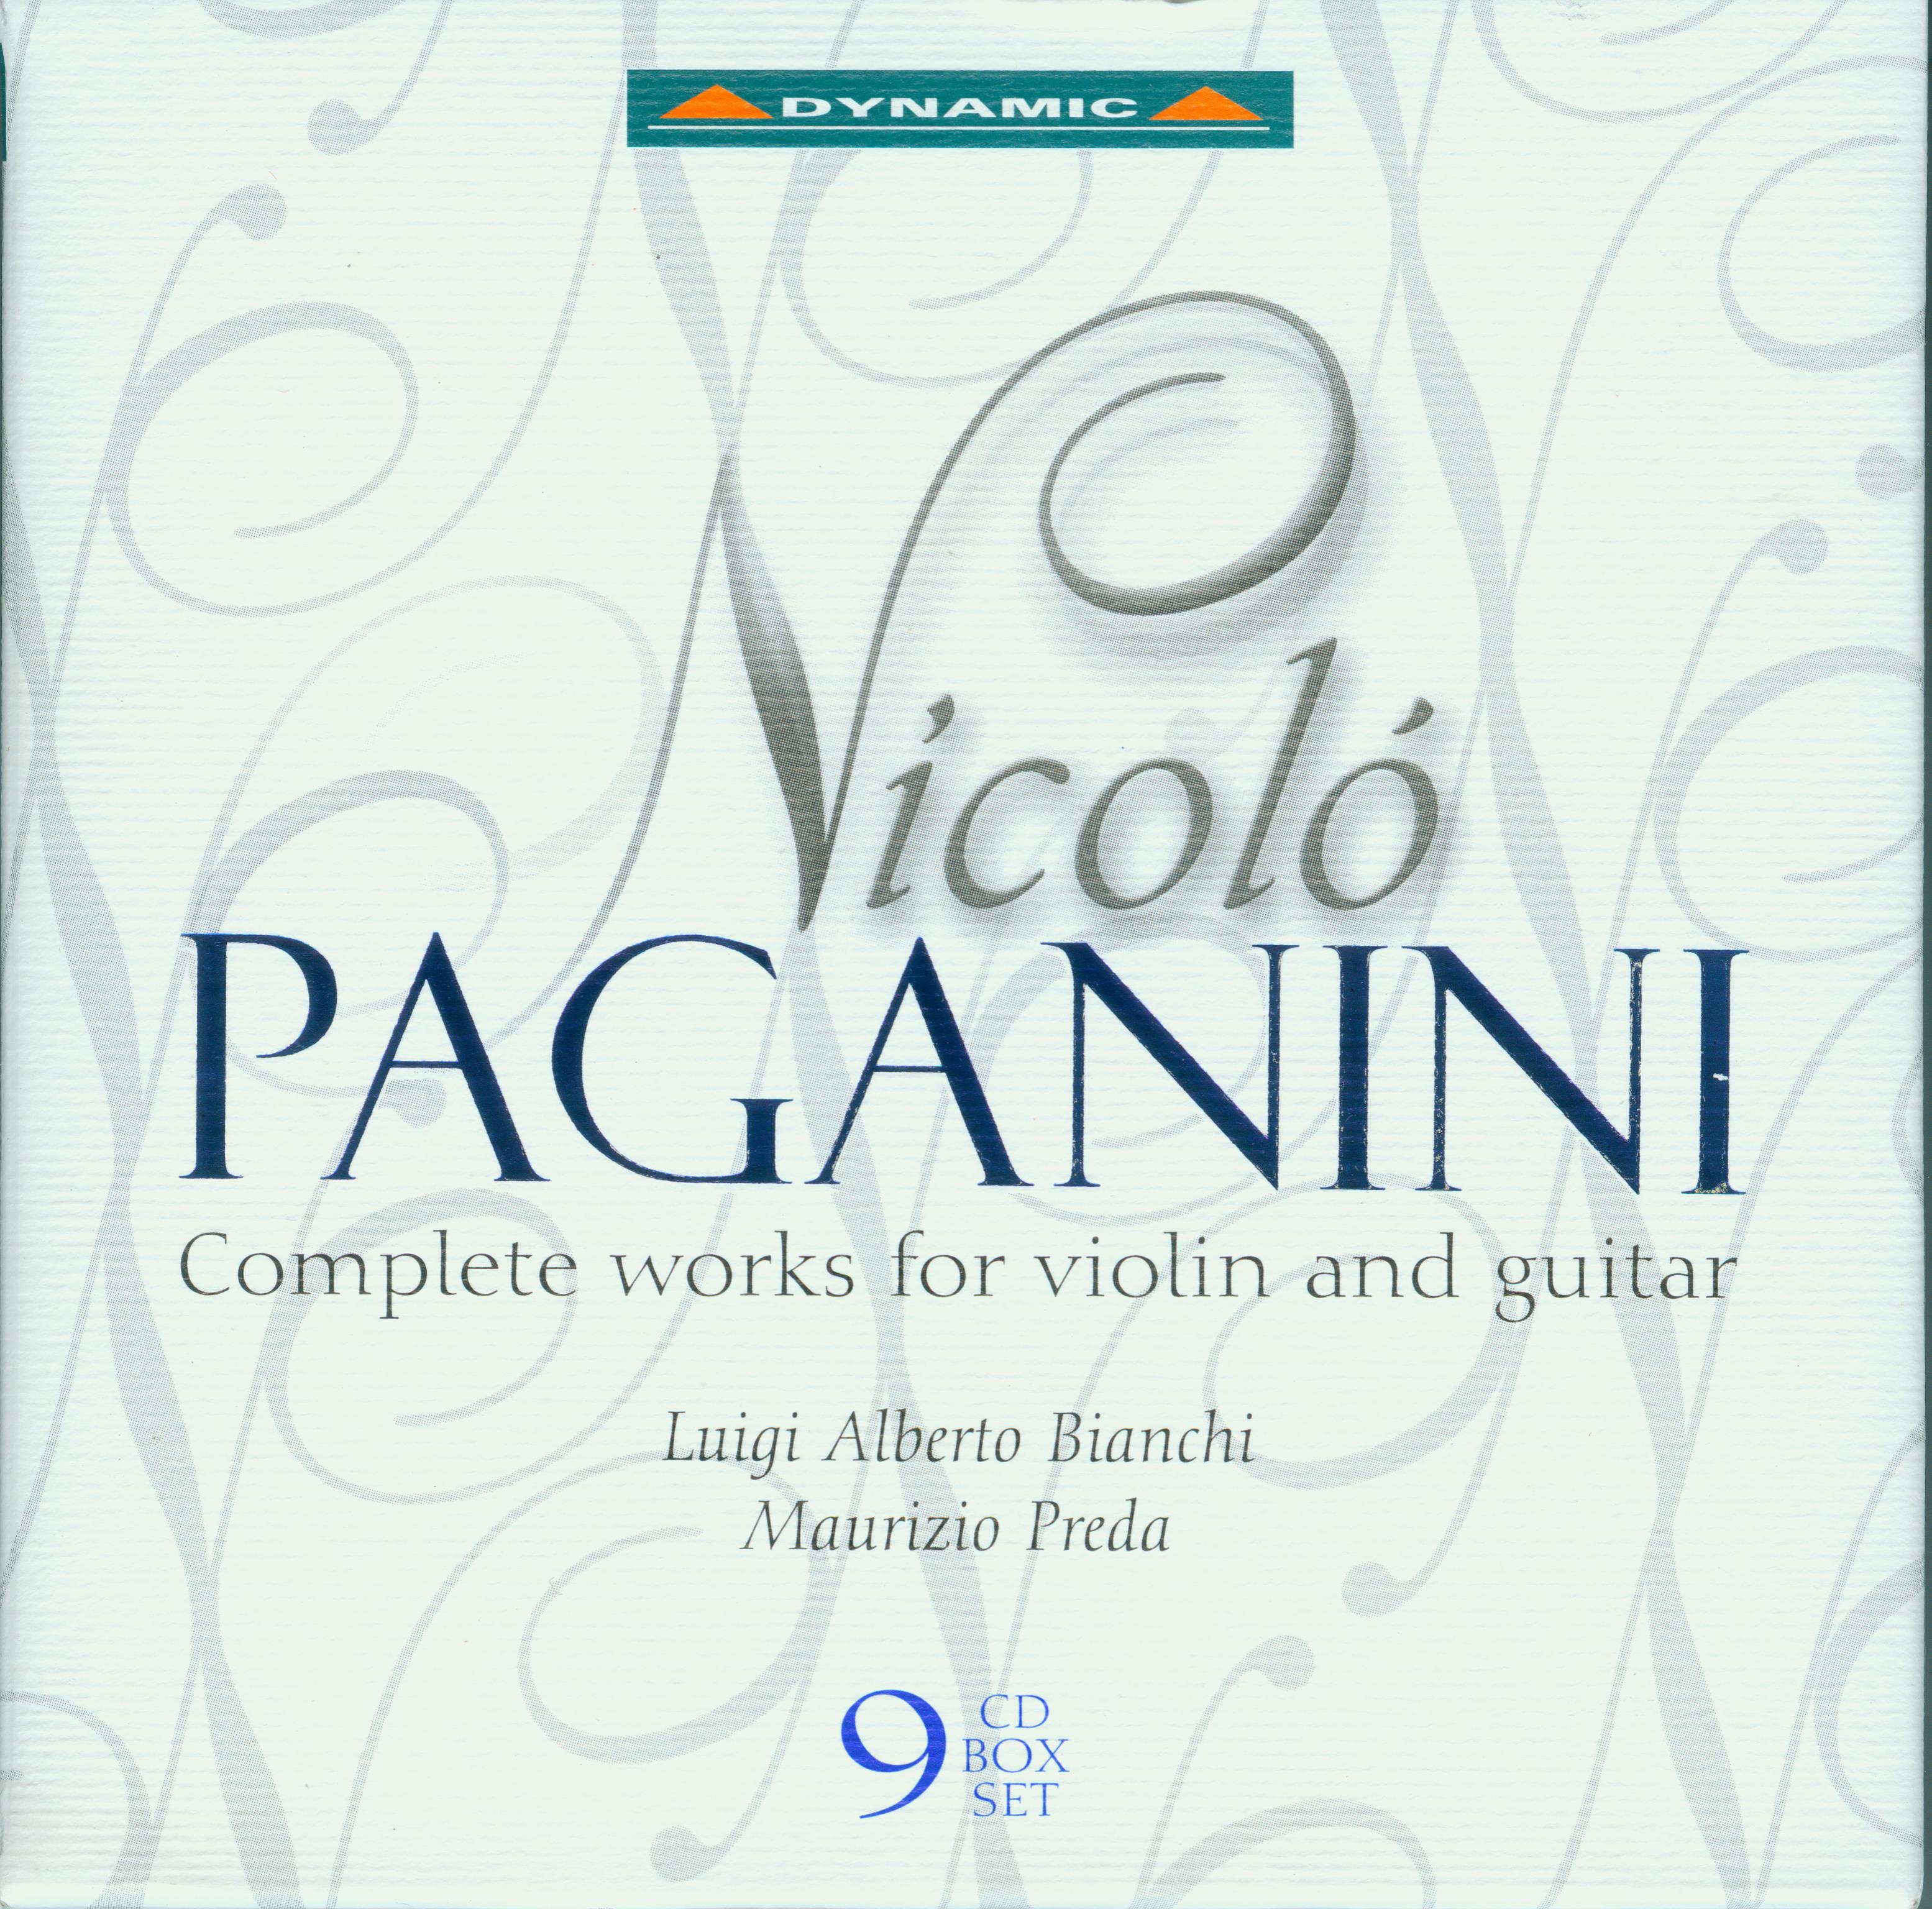 Paganini Complete Works for Violin and Guitar, Preda, Bianchi 9cd